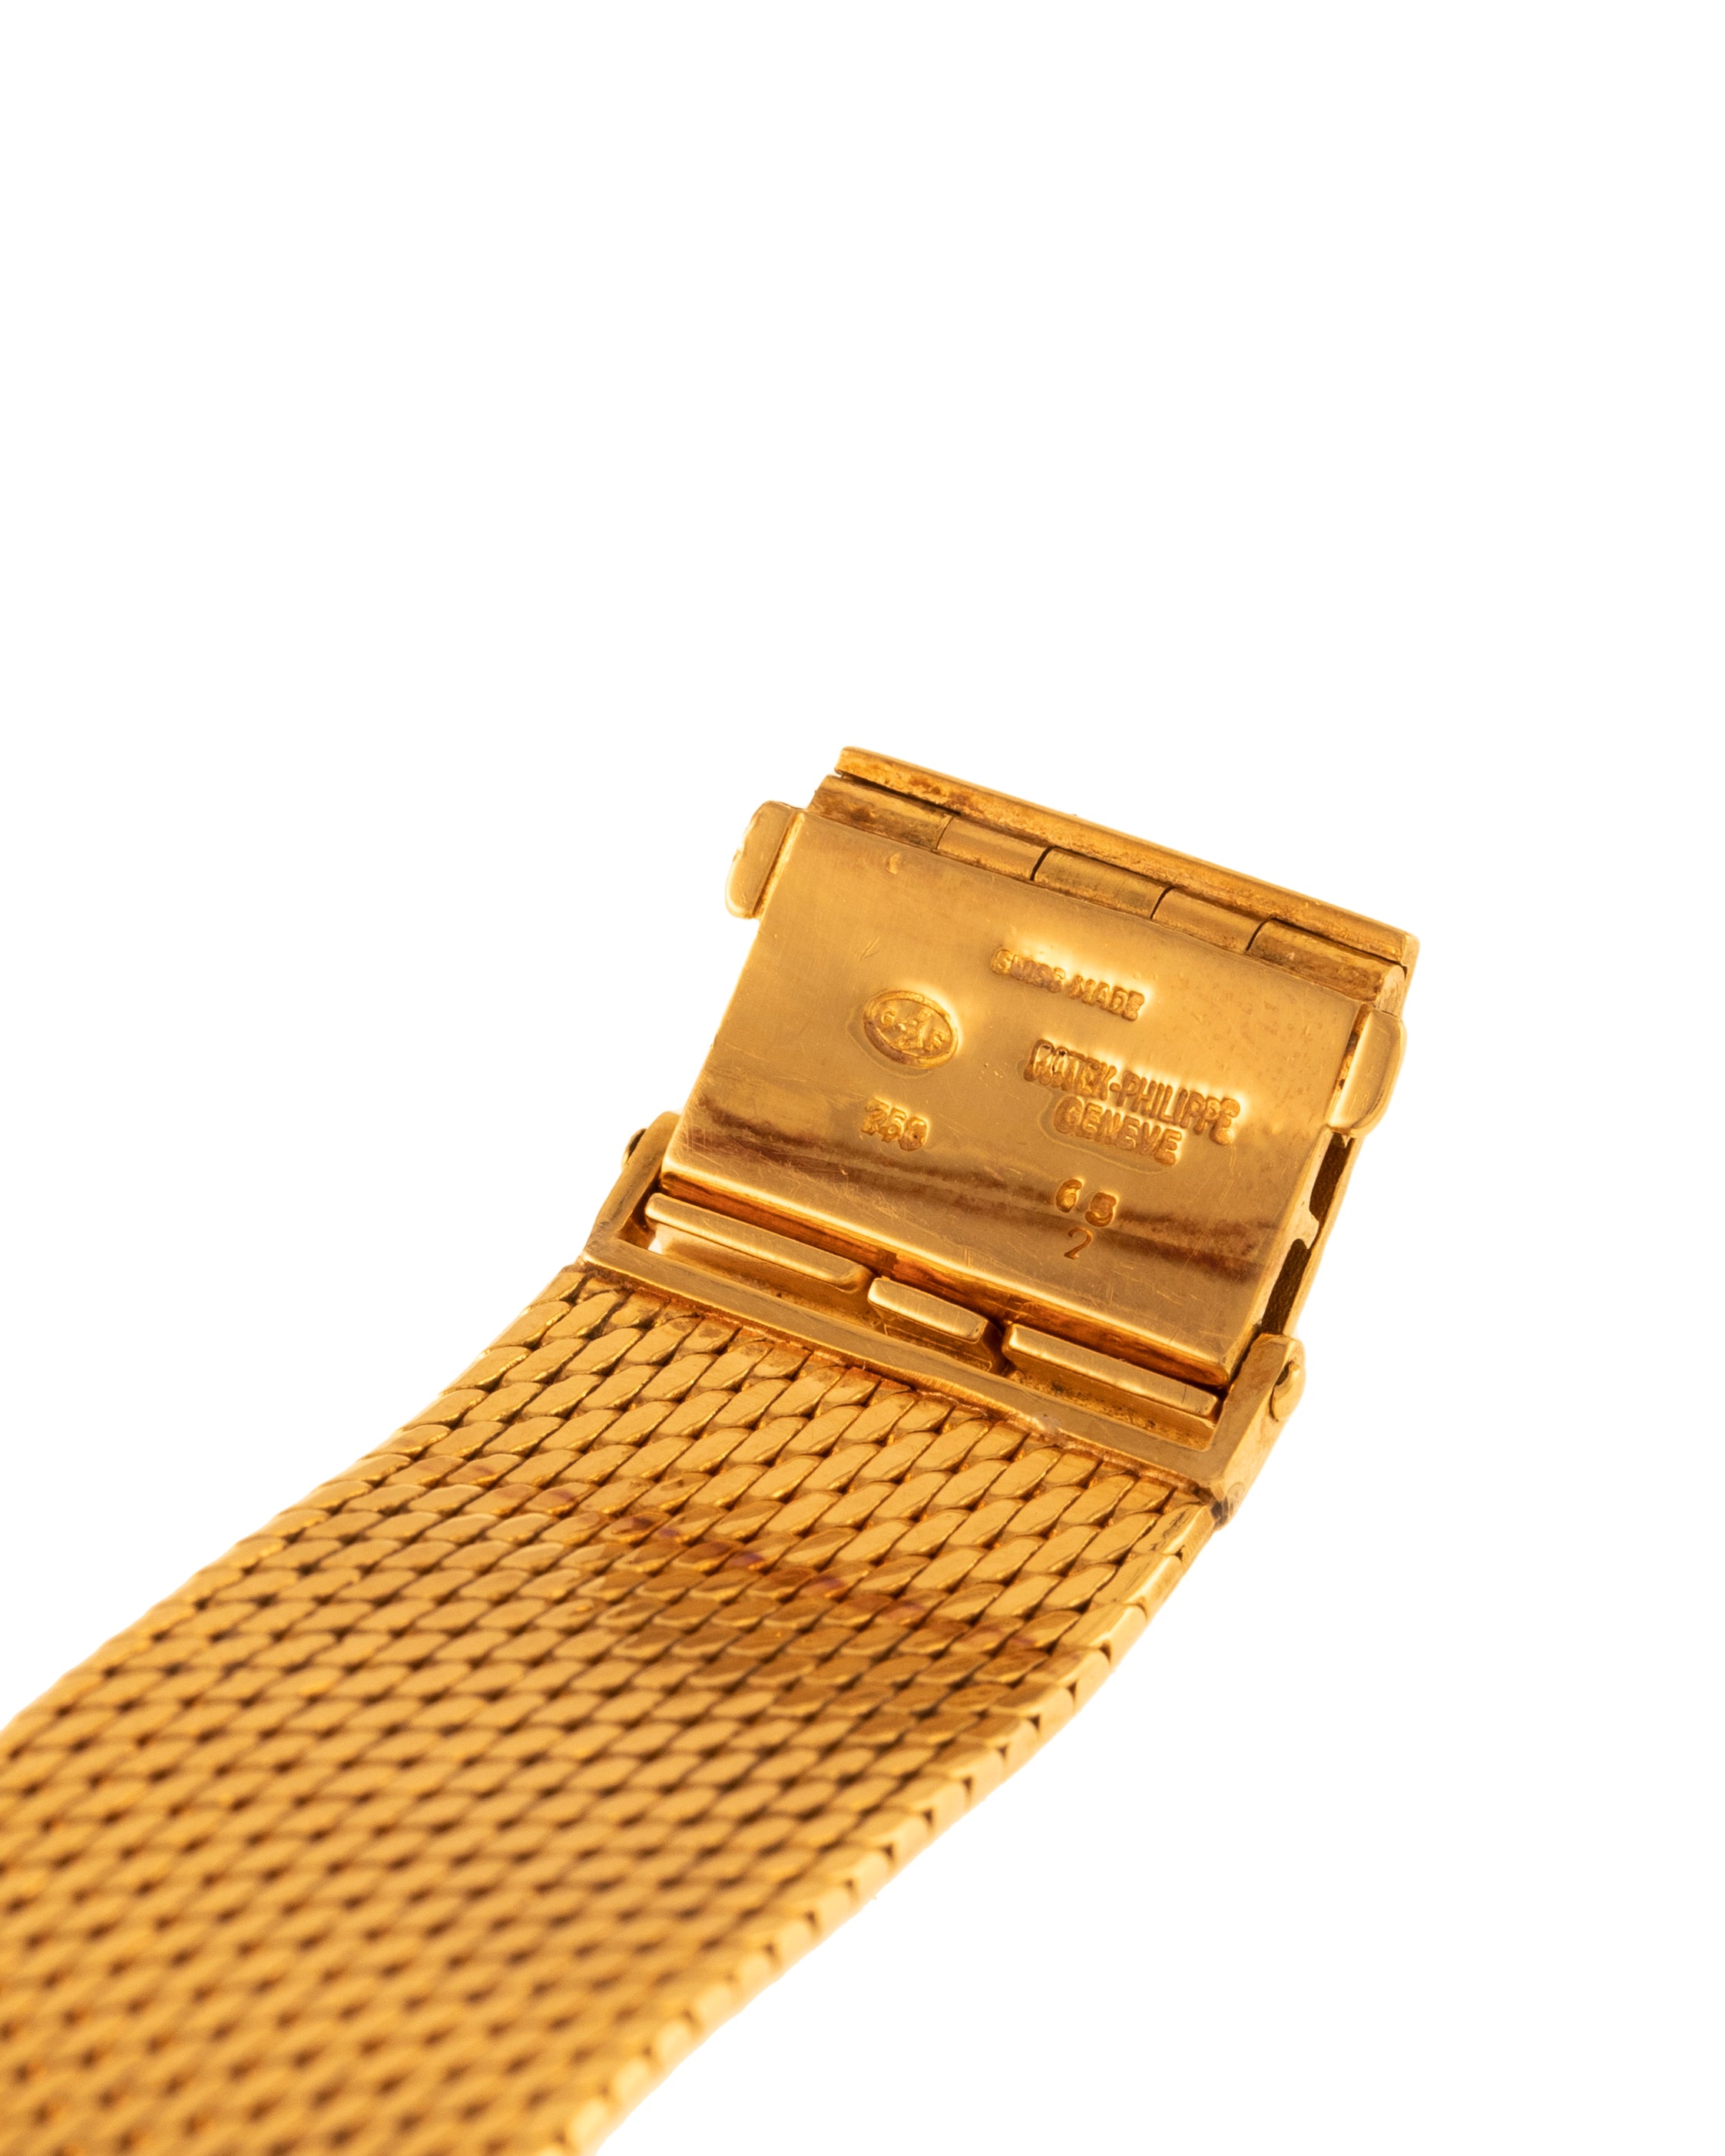 Patek Philippe Ref. 3448/1 in yellow gold bracelet hallmark 